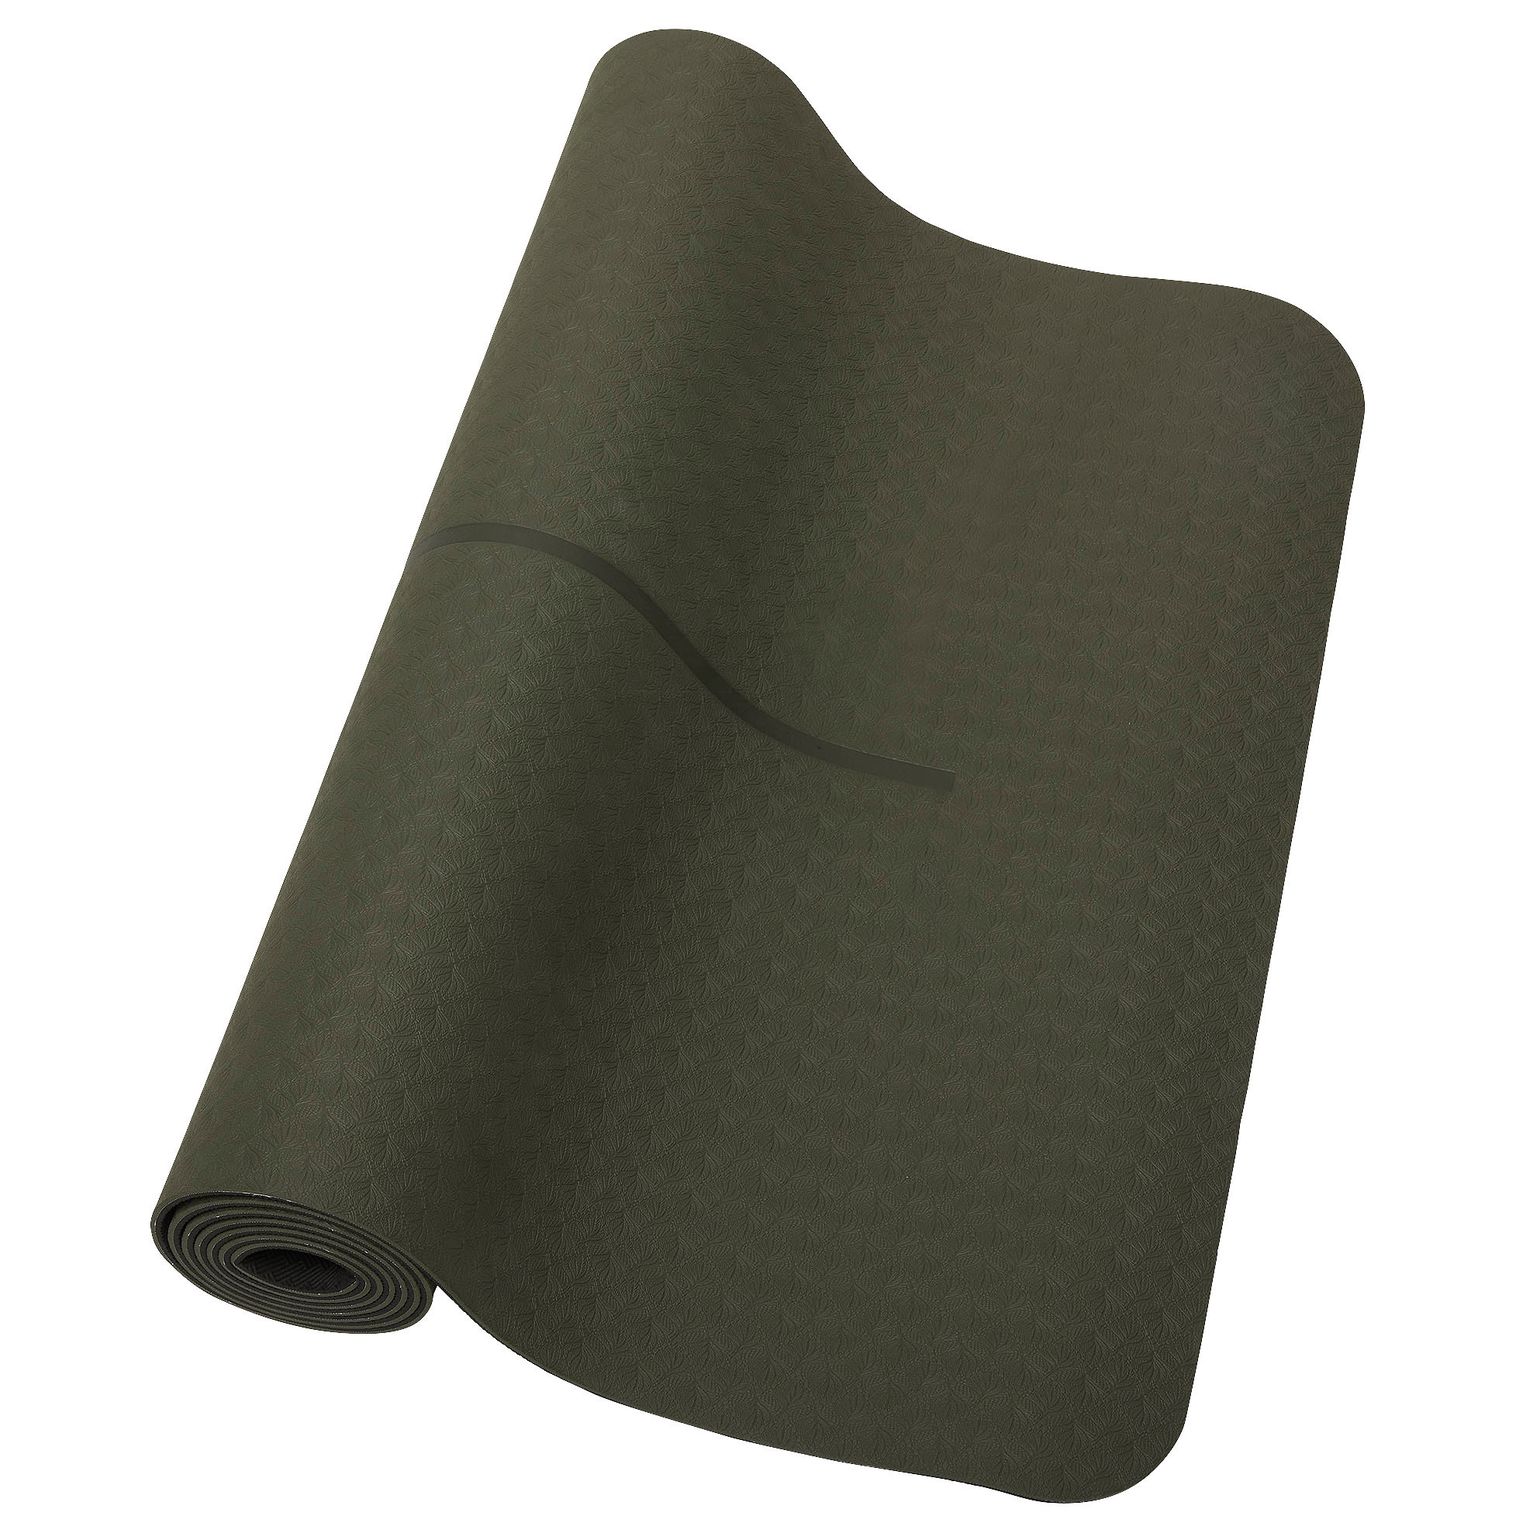 Casall Yoga Mat Position 4 mm Forest Green/Black